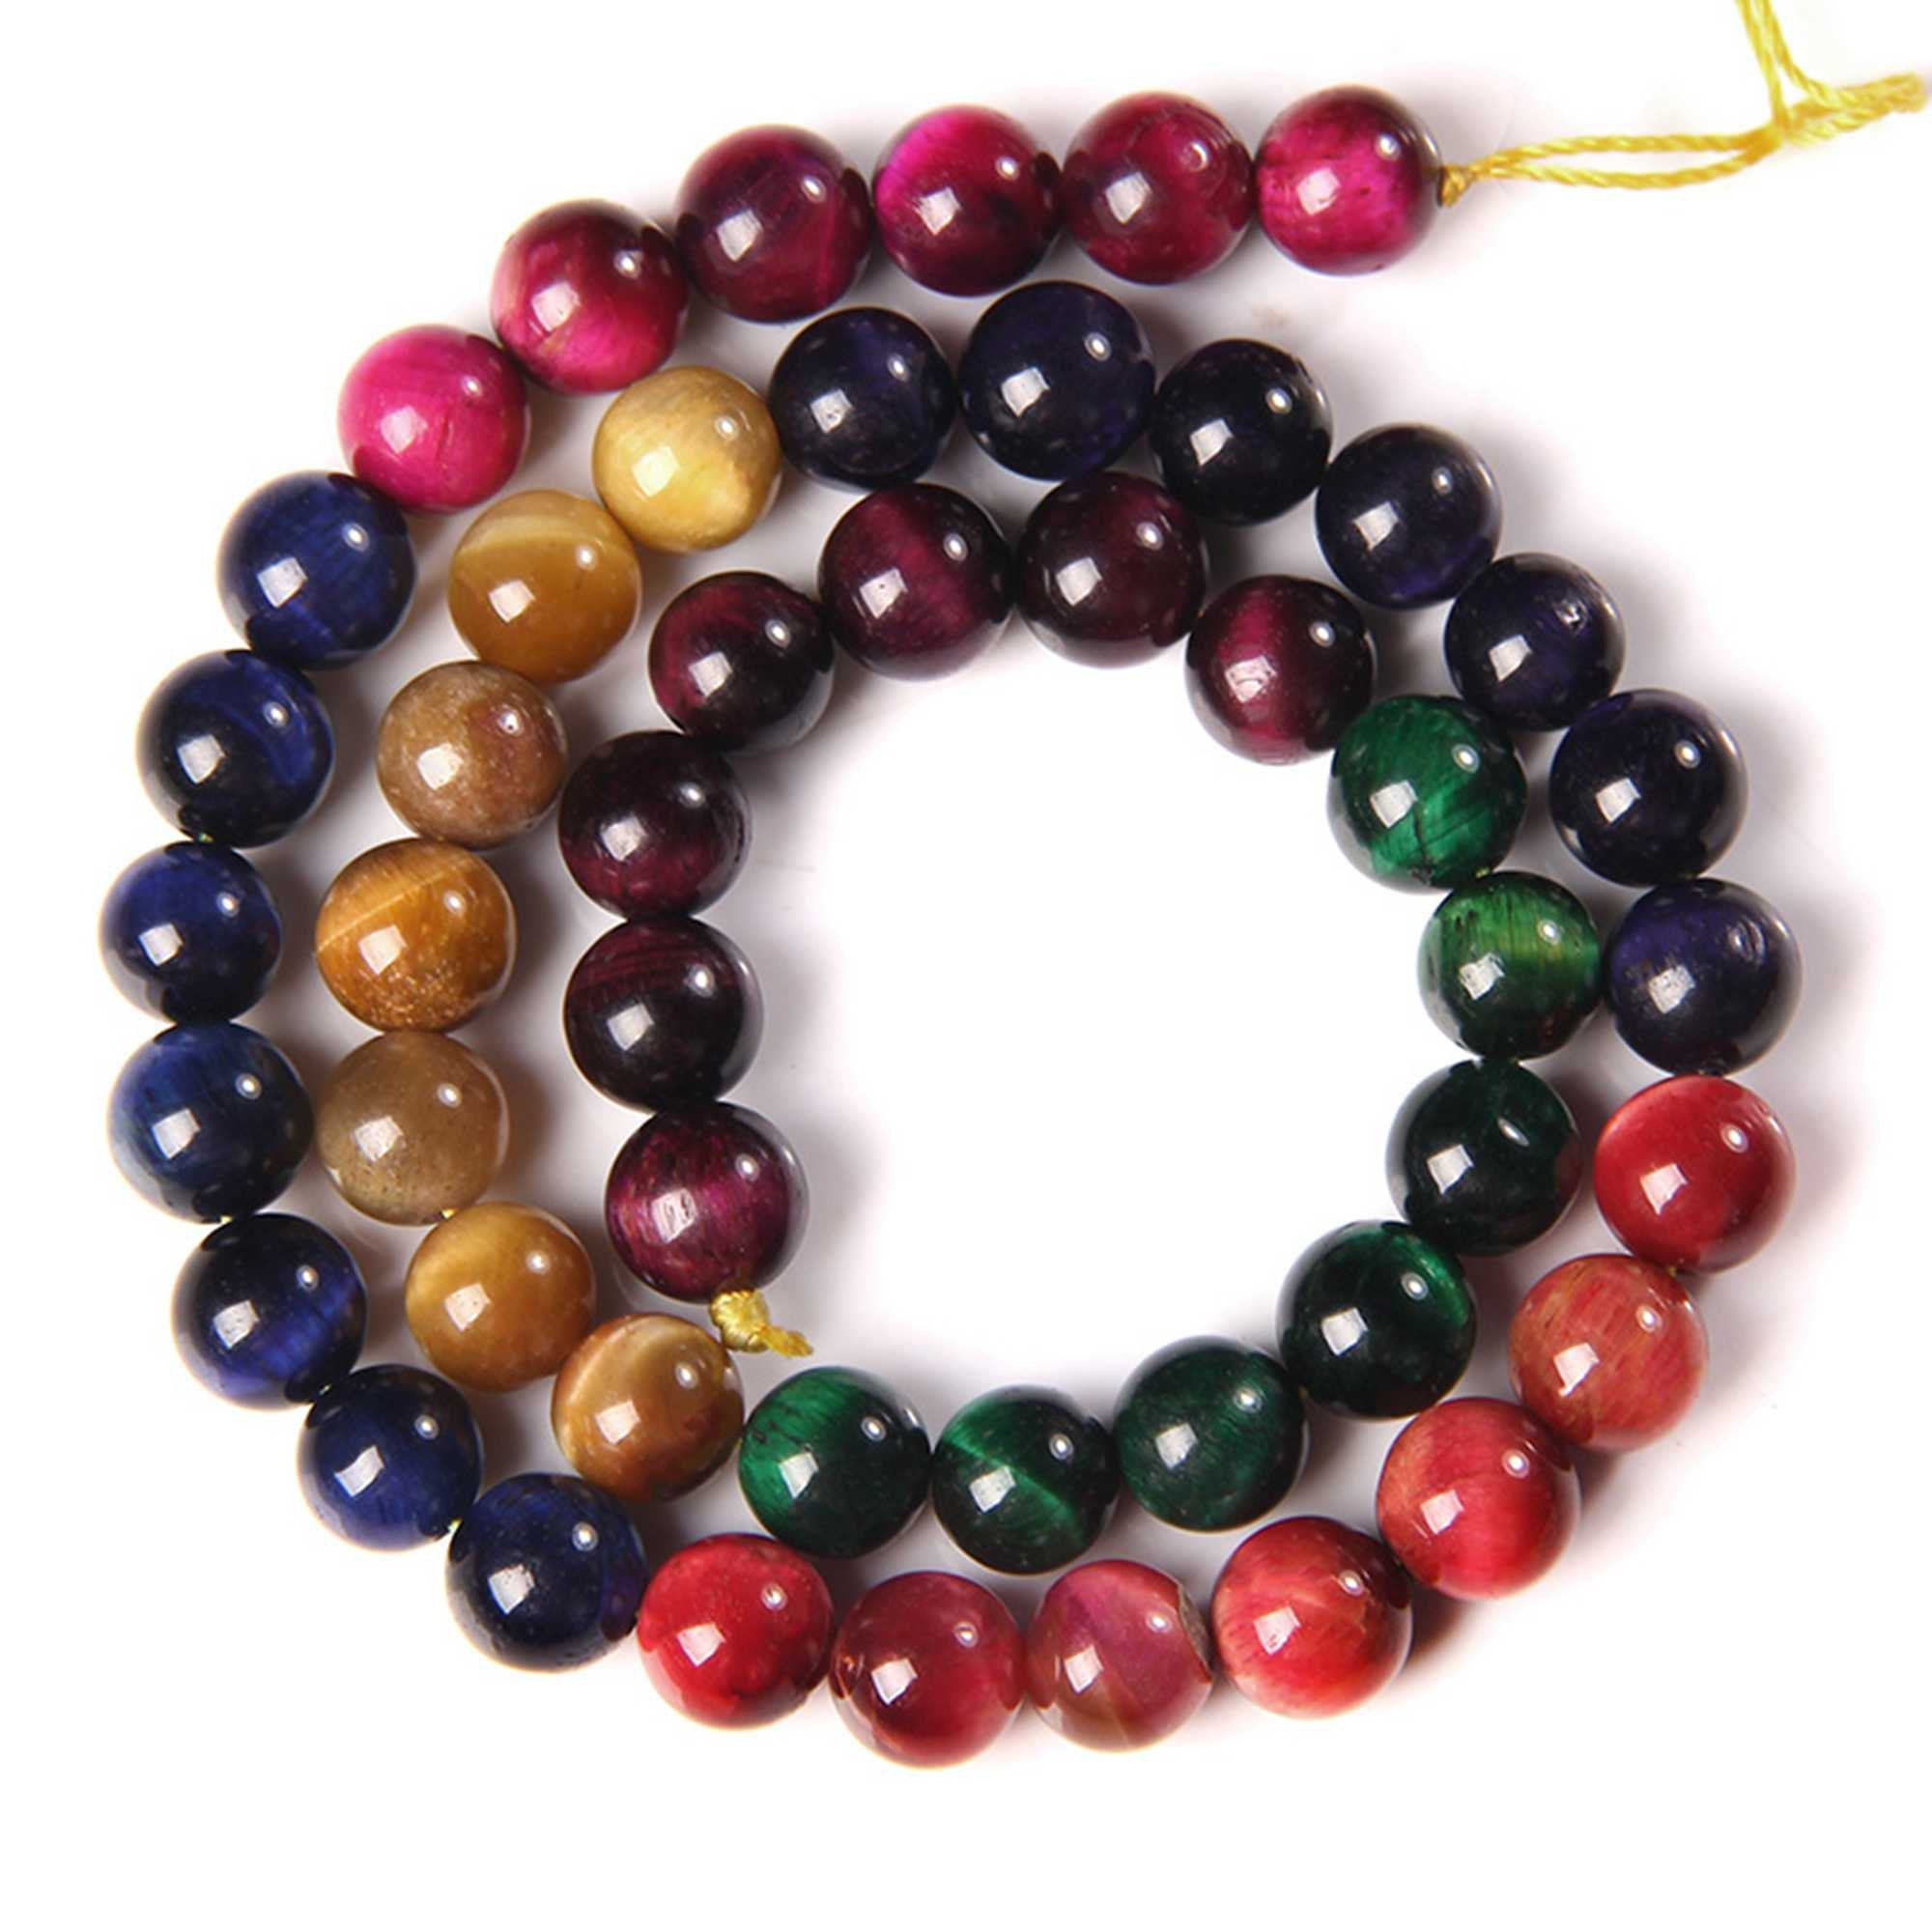 10 Strand Gemstone Bead Tiger Eye Colorful 6mm Jewelry Loose Bracelet Making DIY 